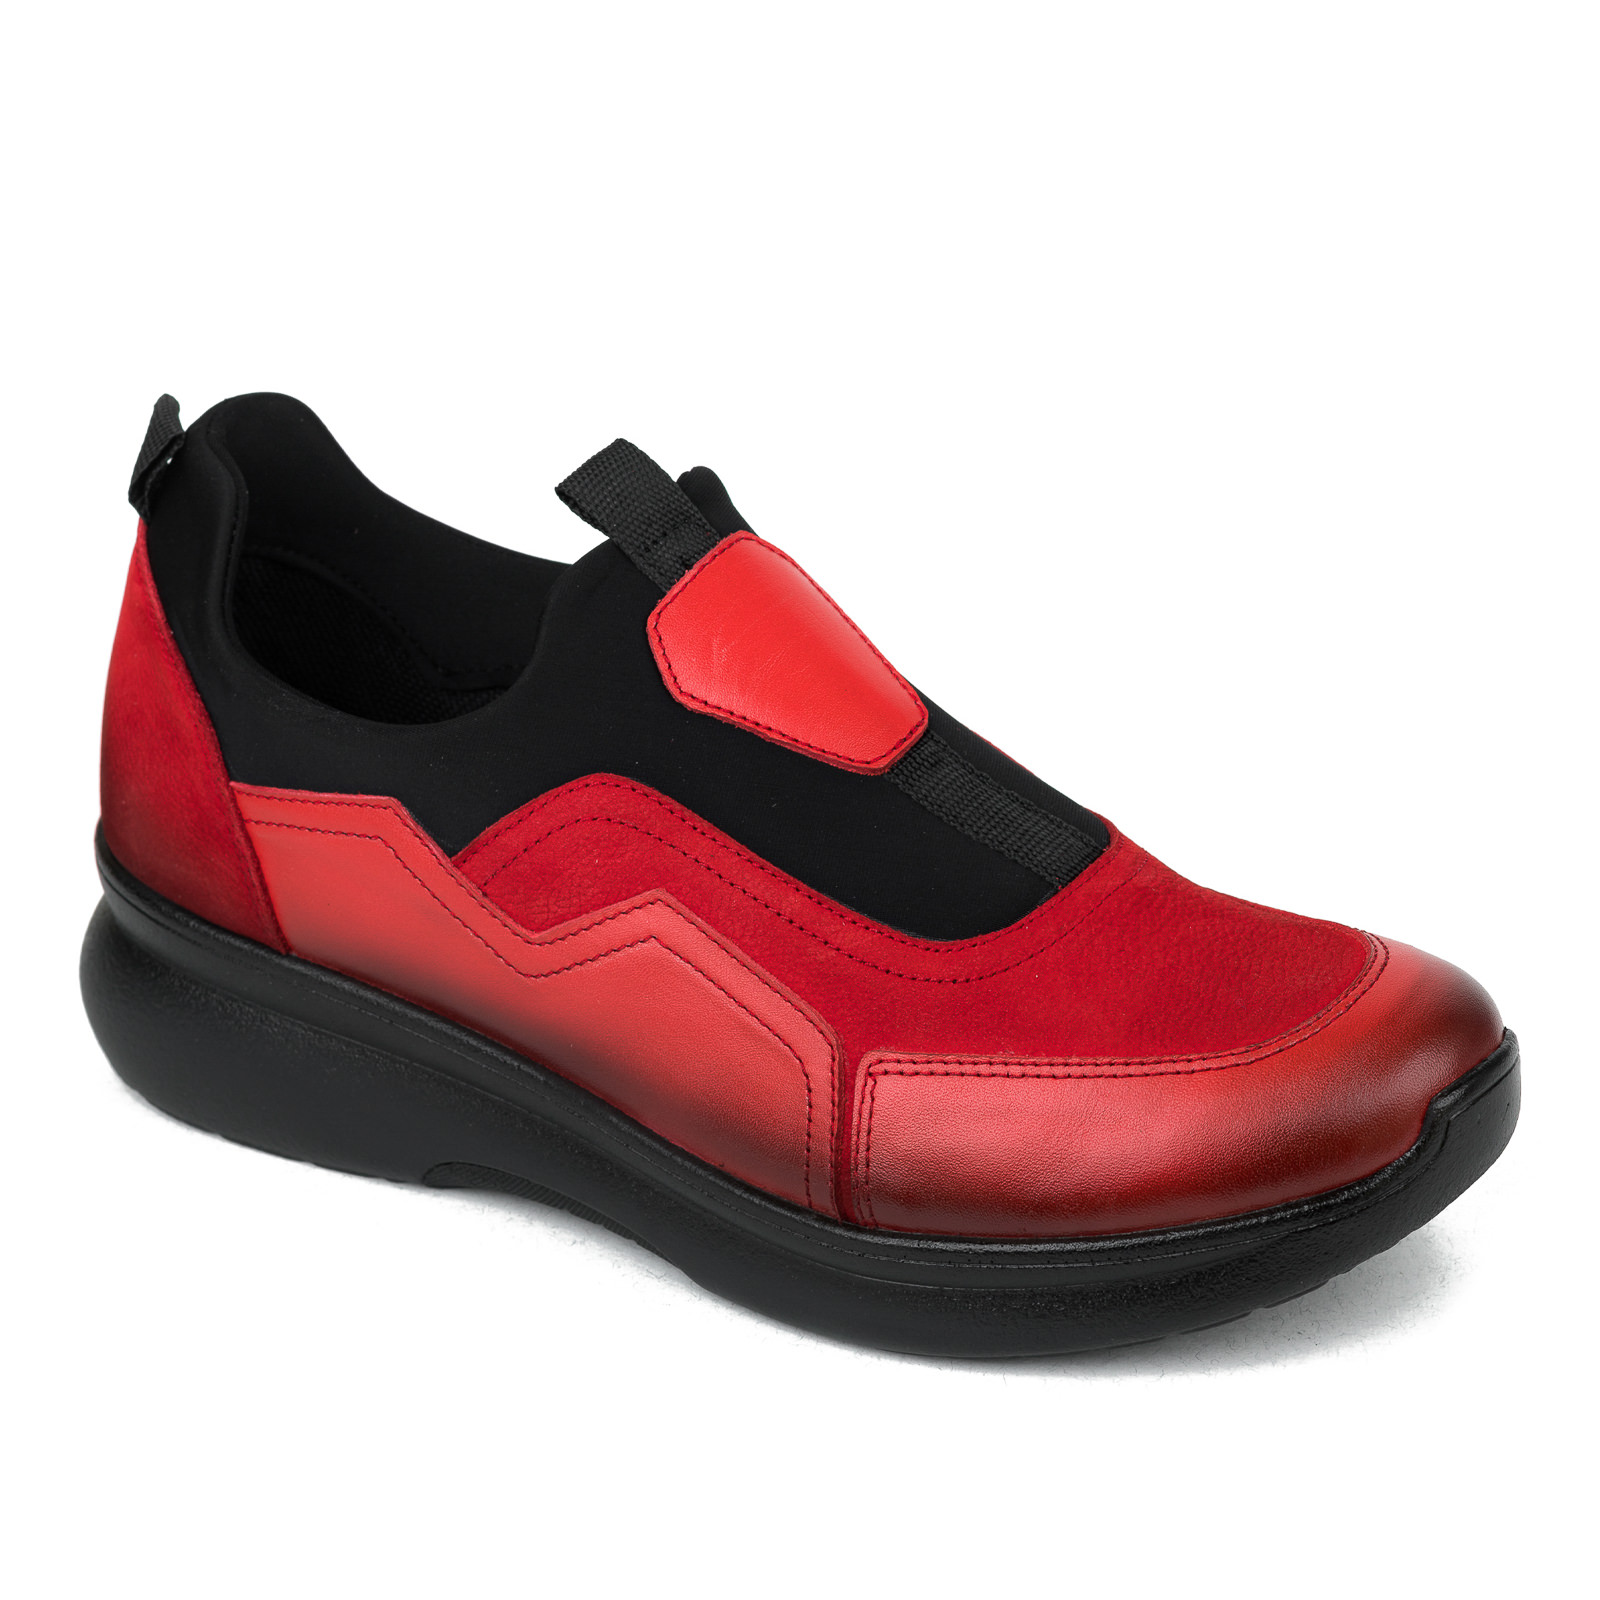 Bőr sportcipő és tornacipő B273 - PIROS